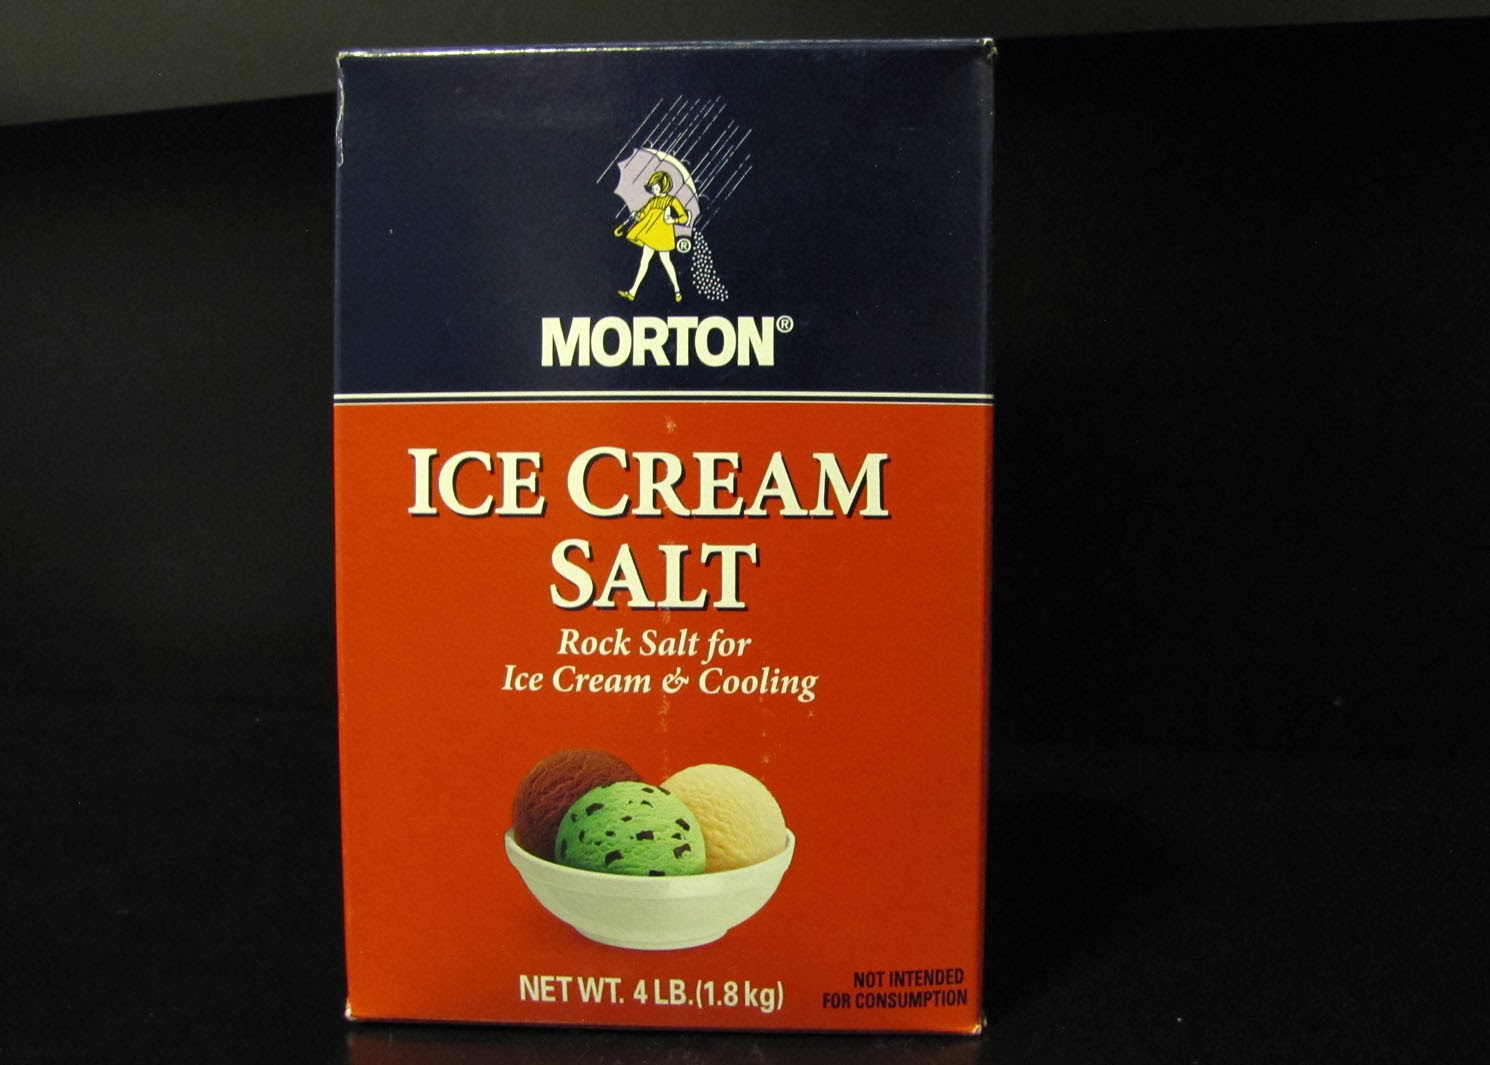 http://2.bp.blogspot.com/-AhdxxDSecjY/Uv2dAuWHRZI/AAAAAAAAfPI/UXdOafbOf6A/s1600/Morton+Ice+Cream+Salt+box.jpg